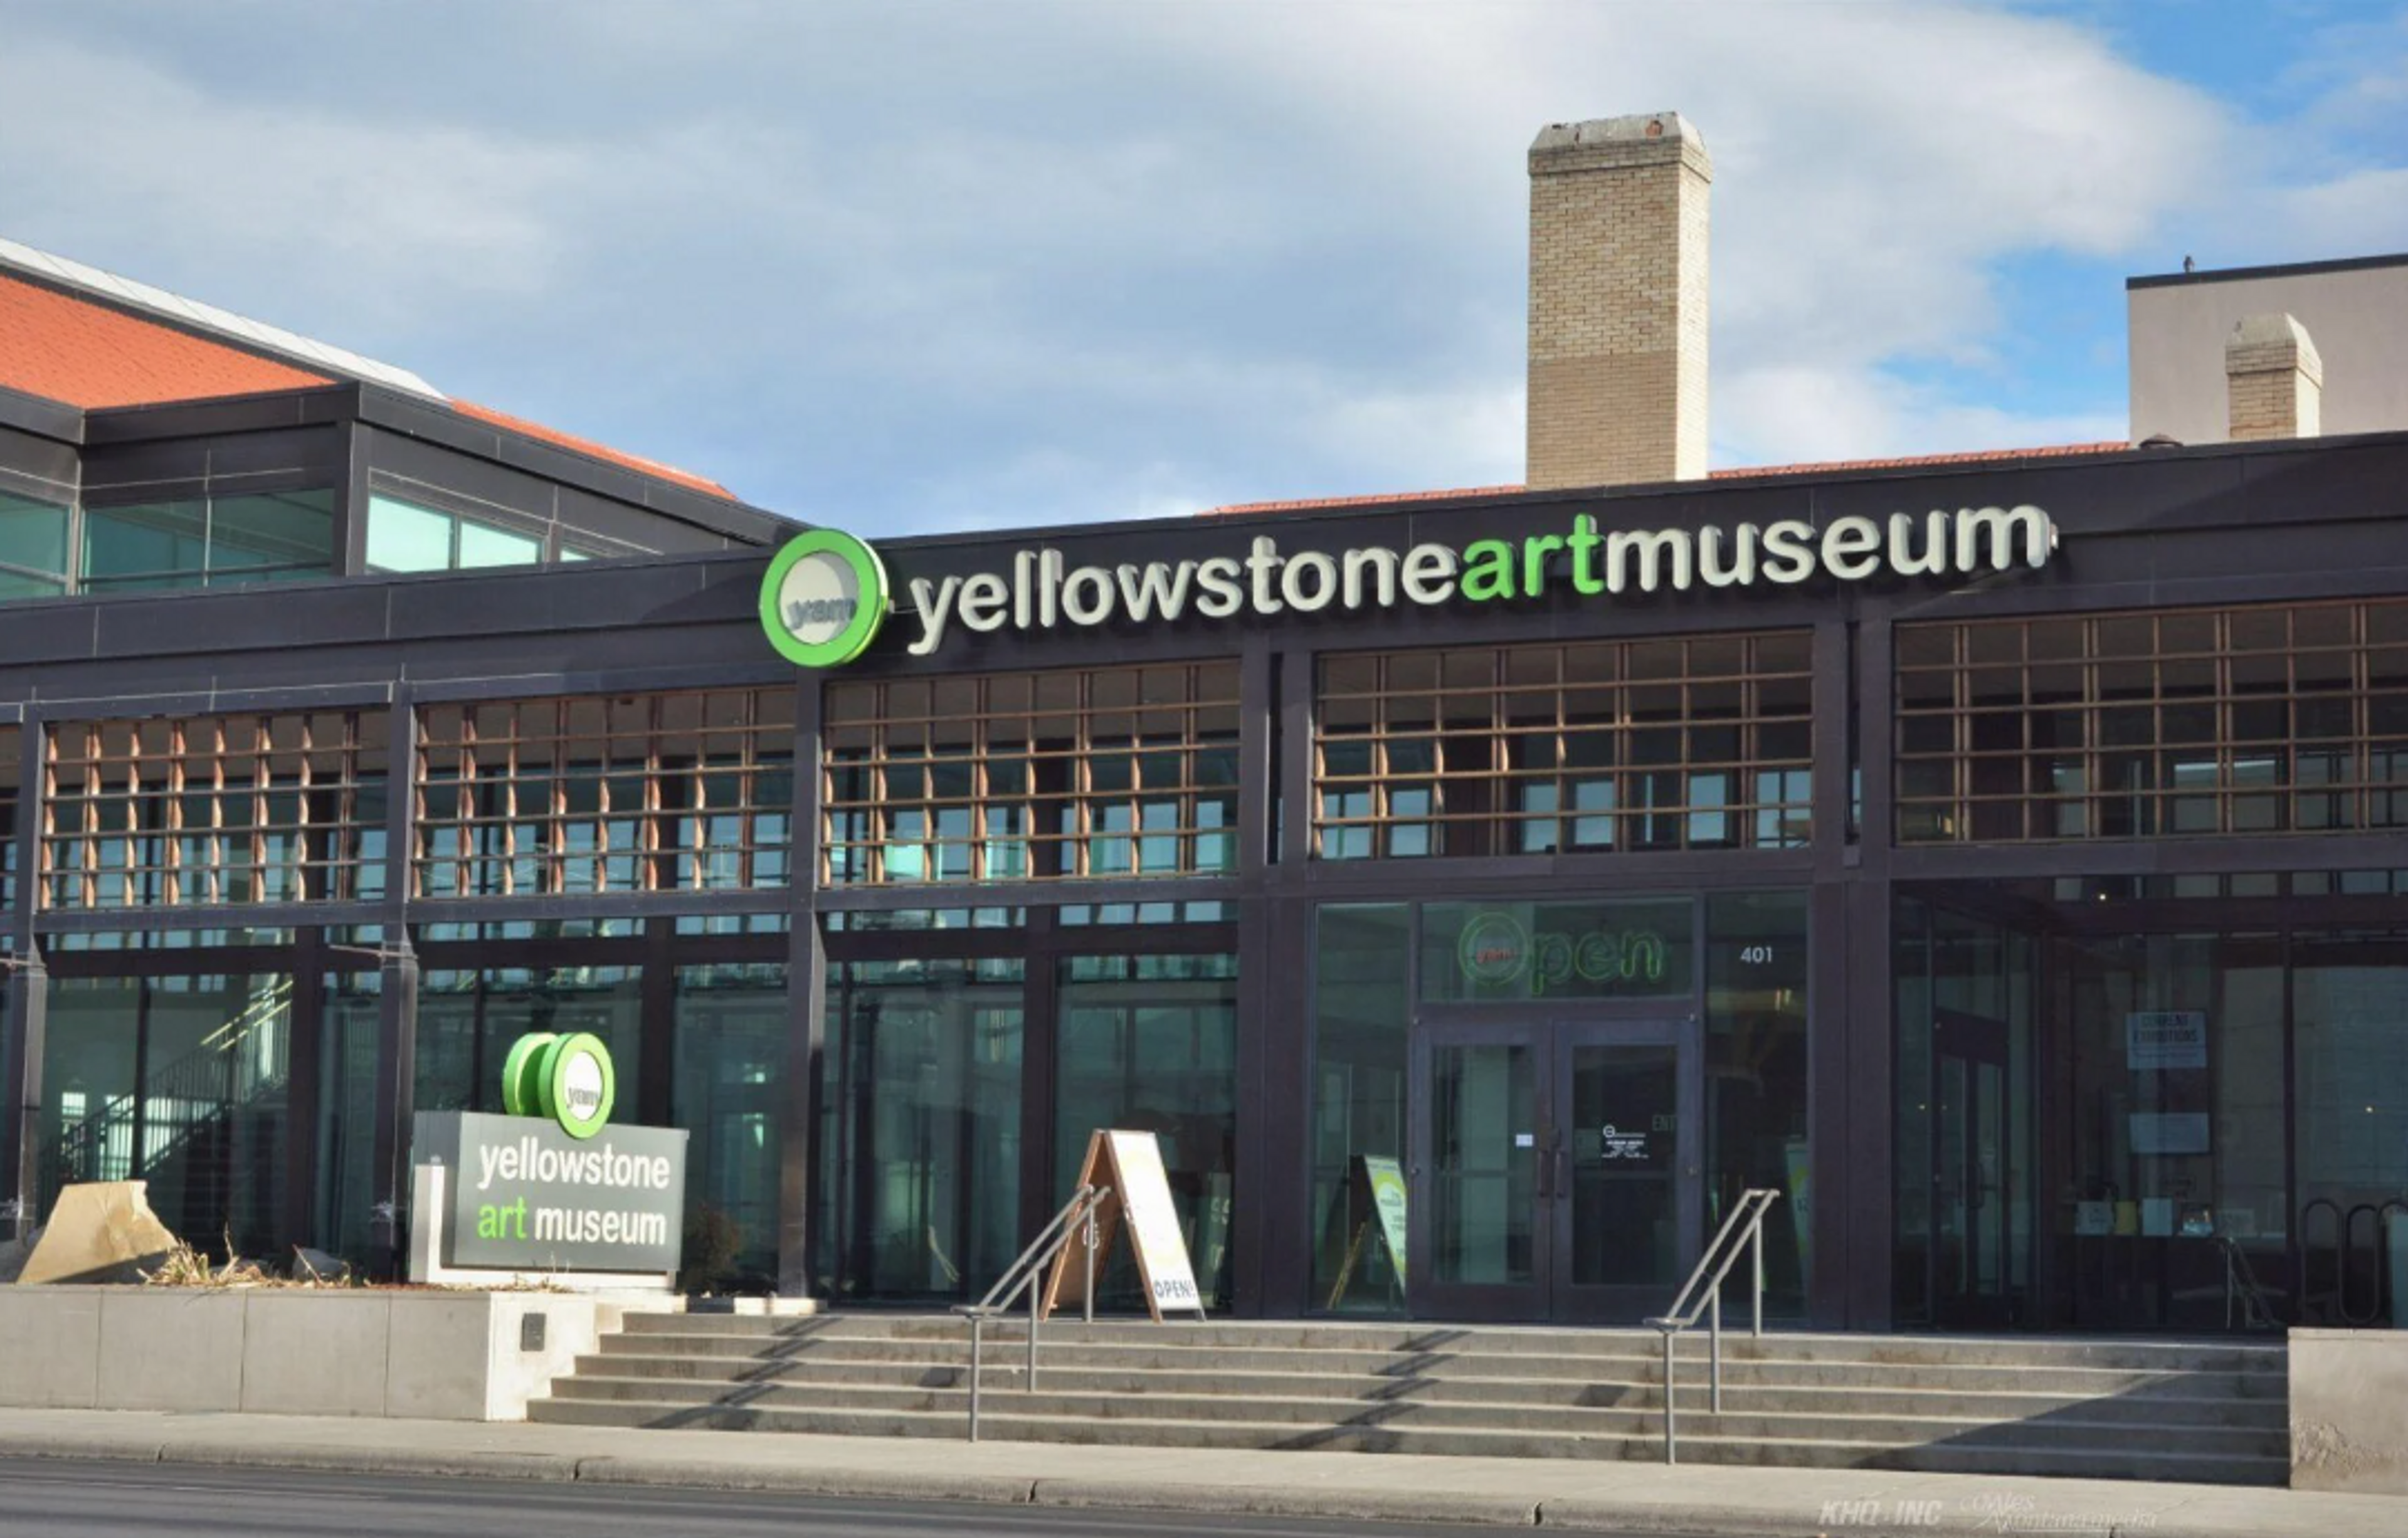 Yellowstone Art Museum in Billings Montana